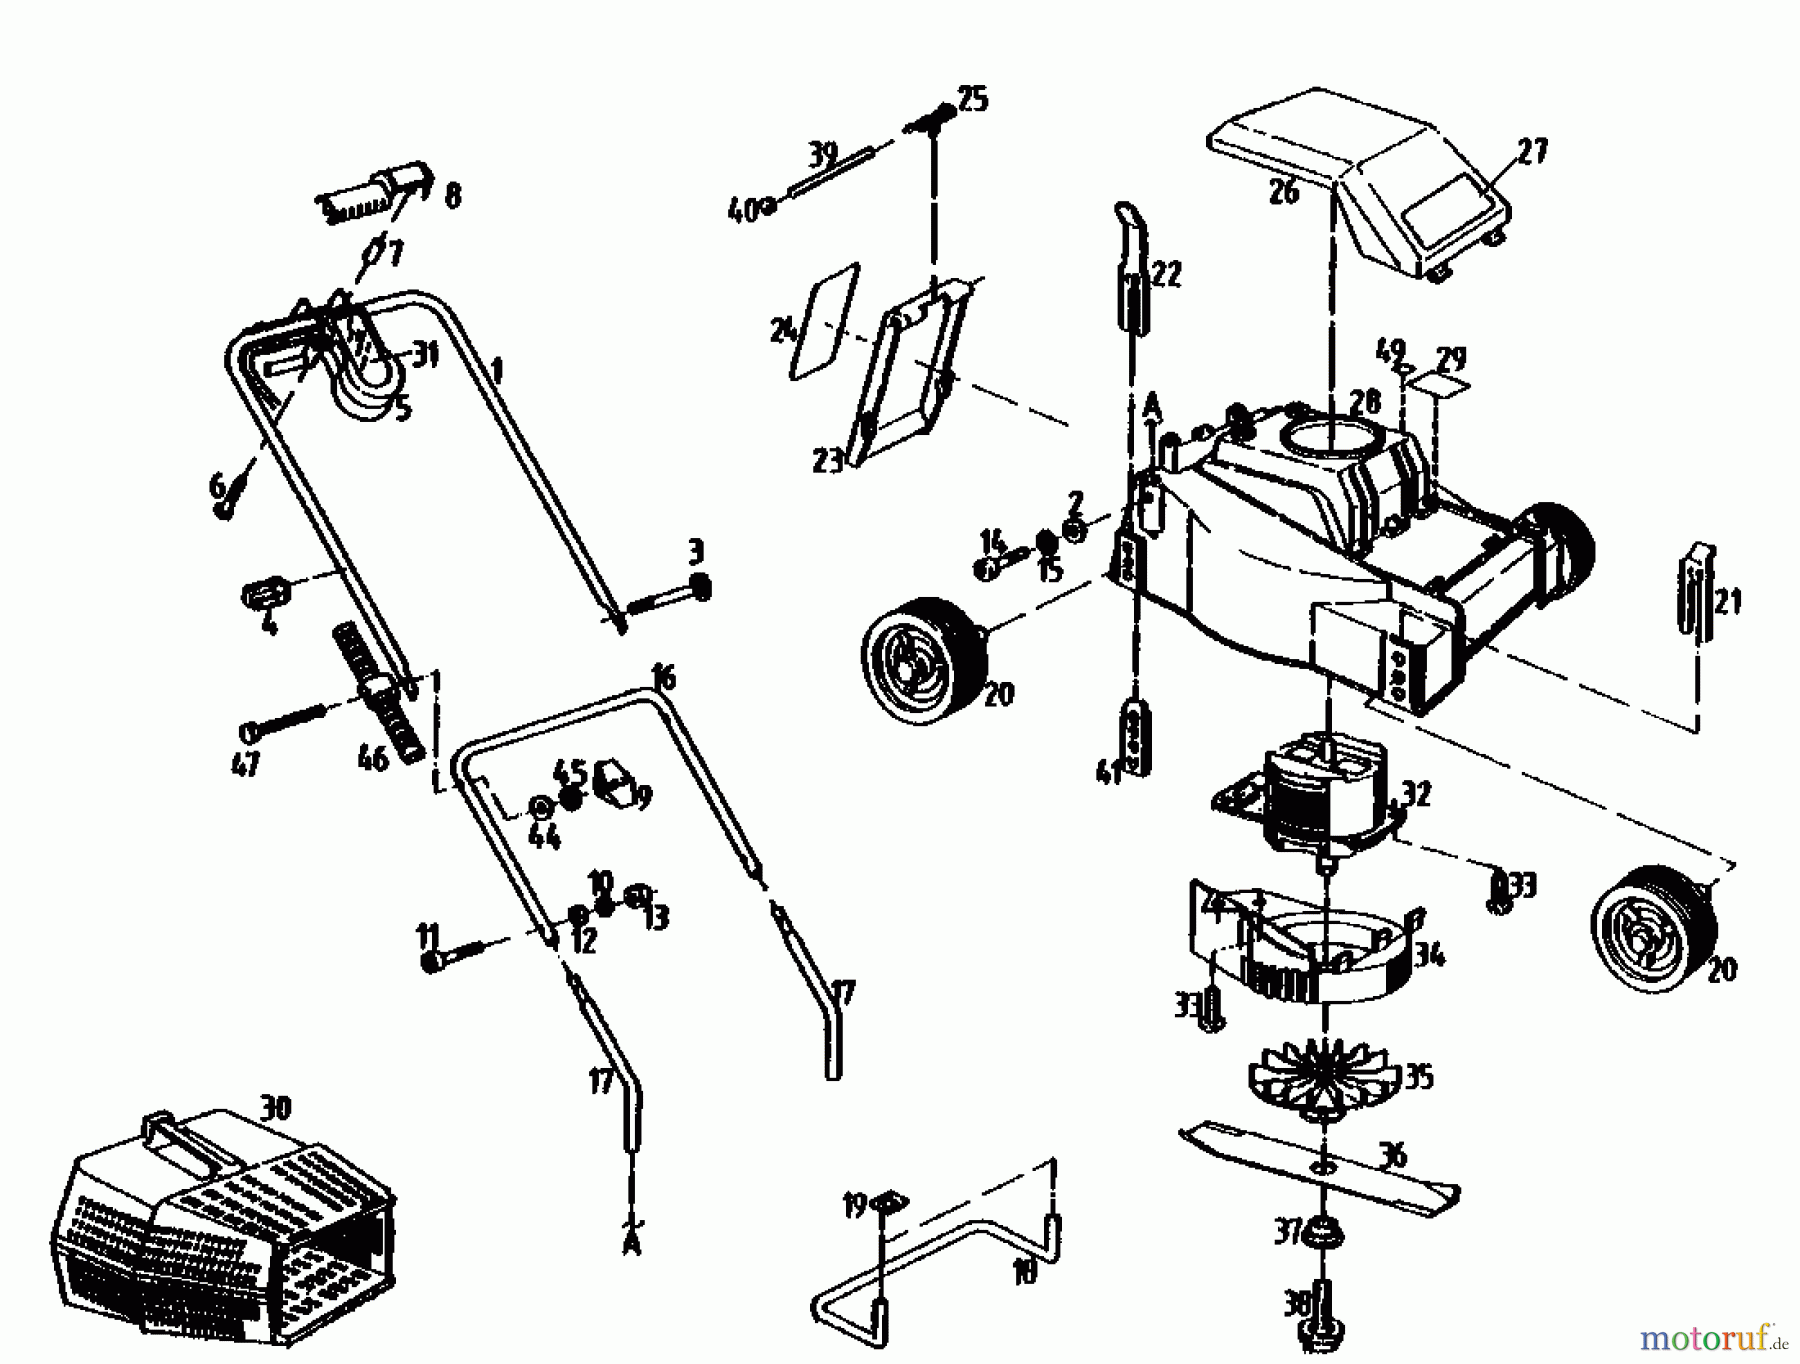  Golf Elektromäher TURBO 32 02845.06  (1990) Grundgerät